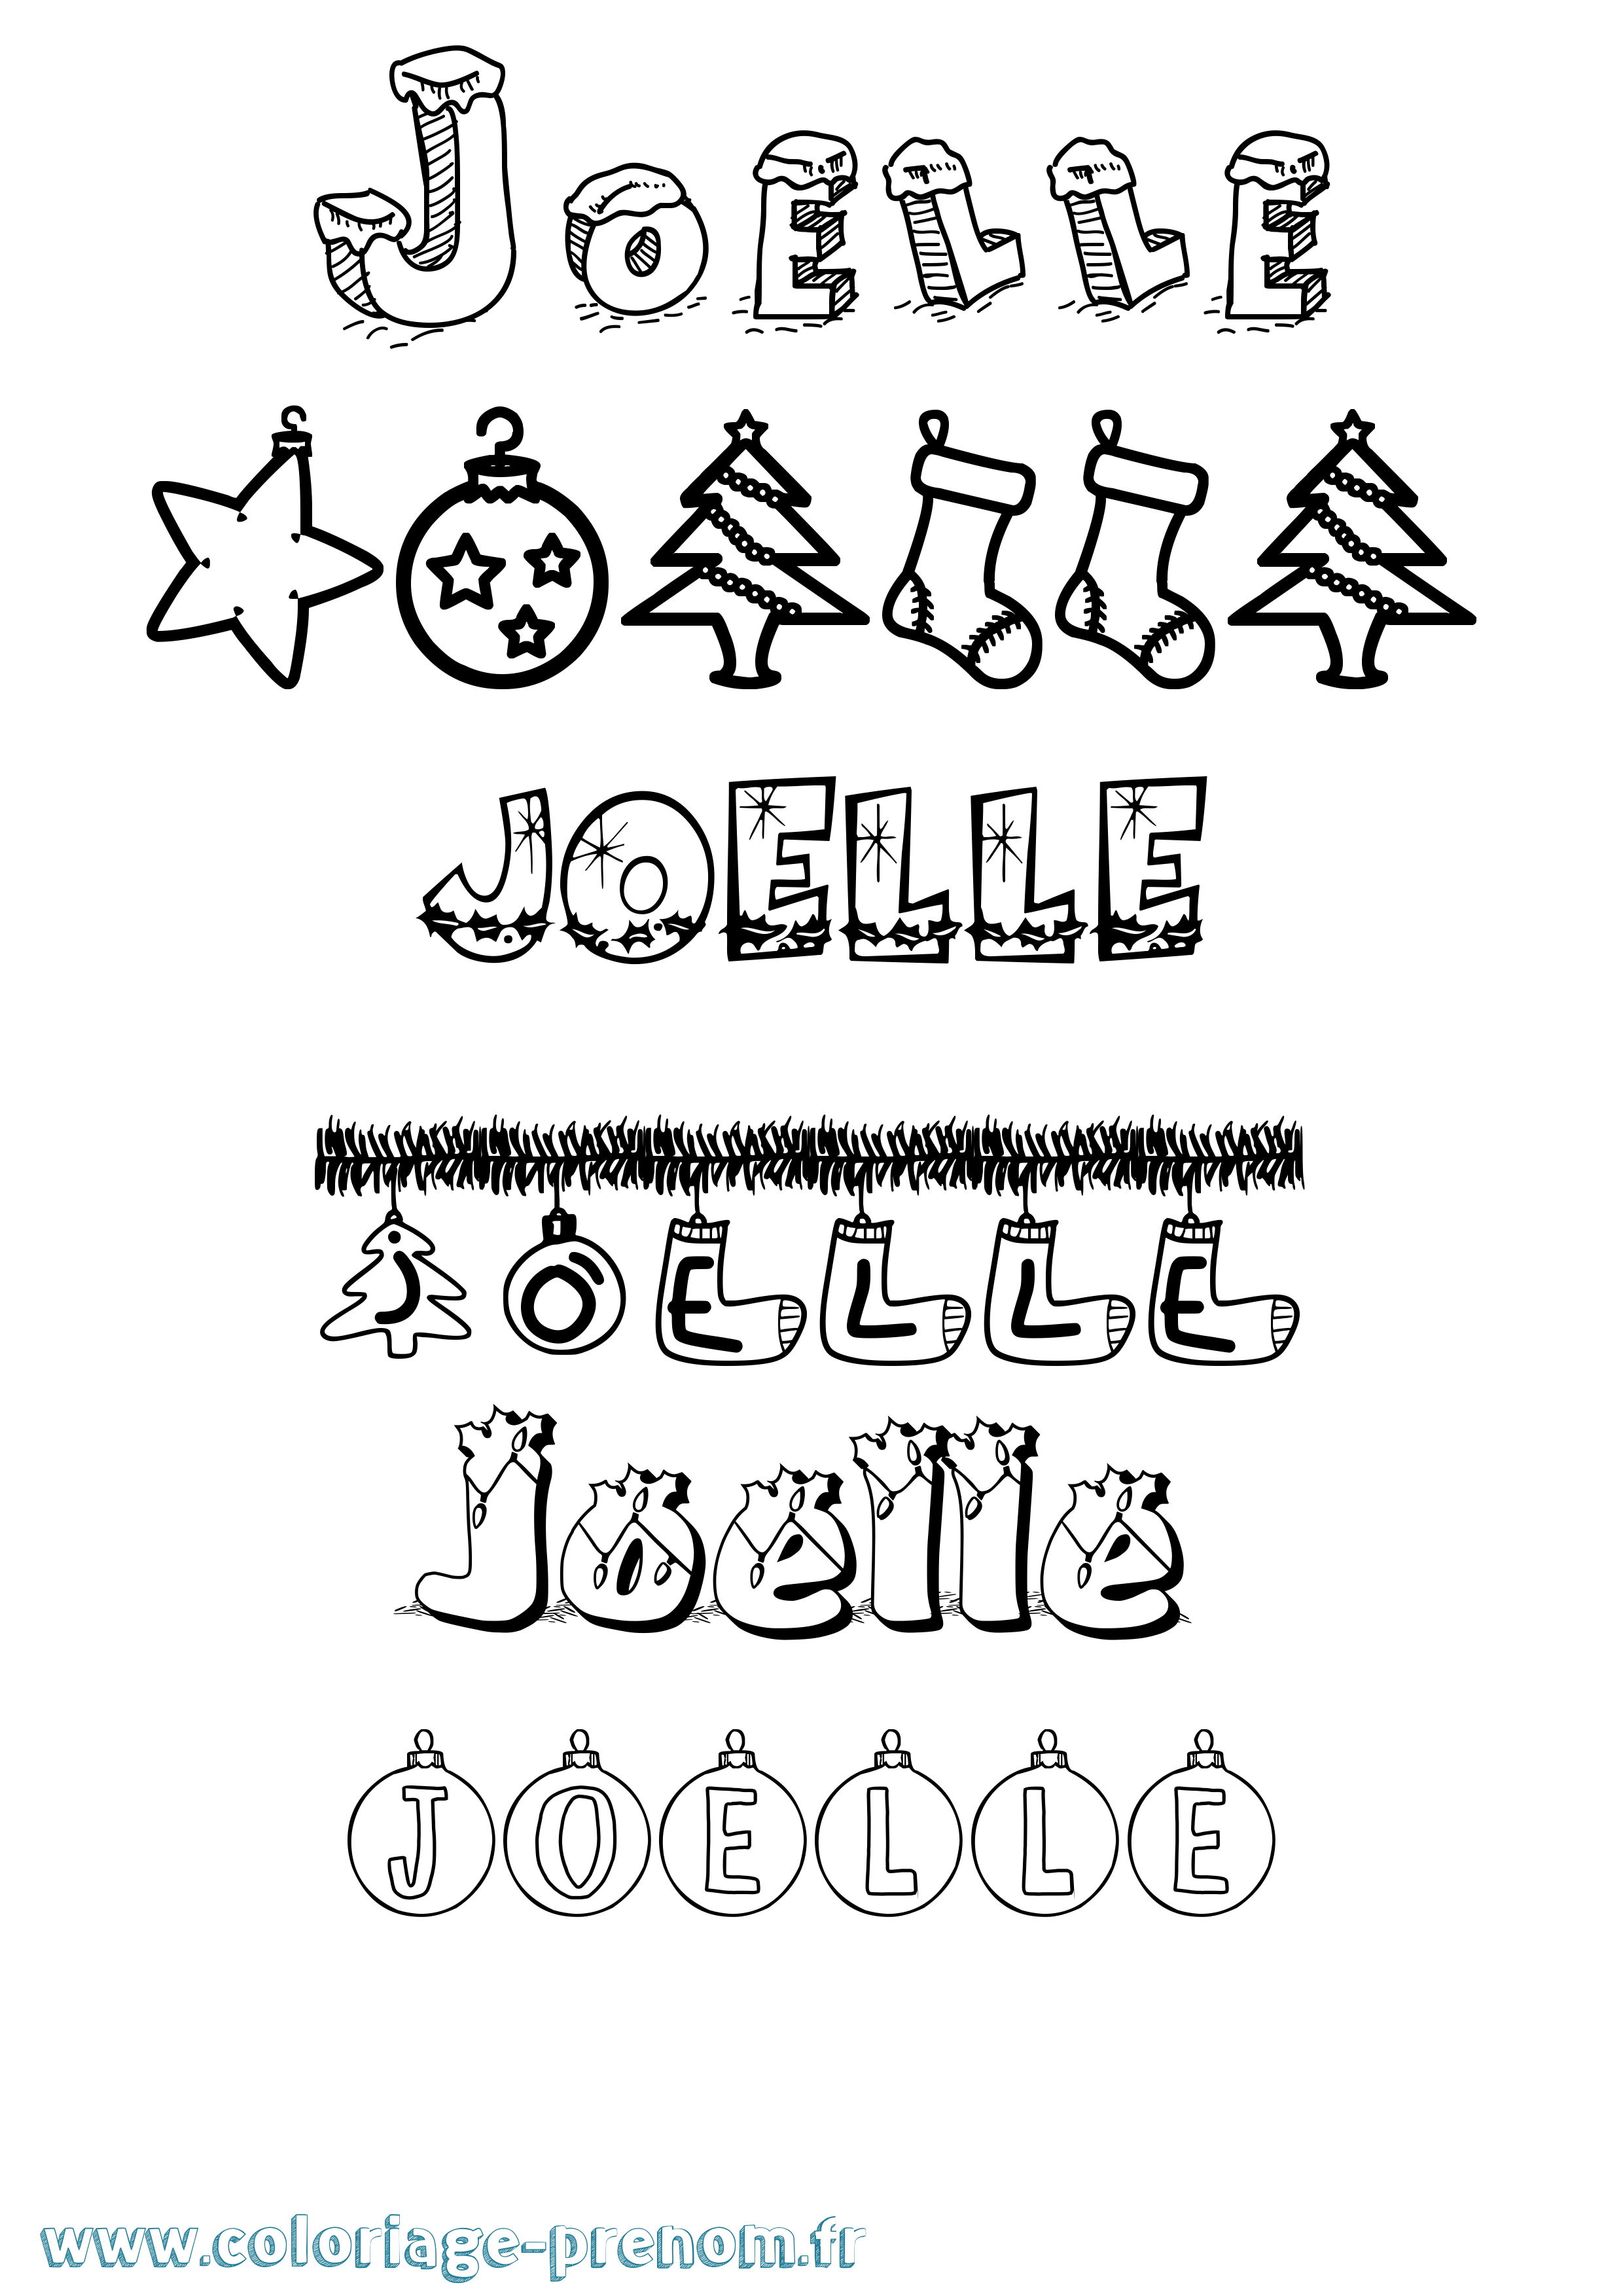 Coloriage prénom Joelle Noël